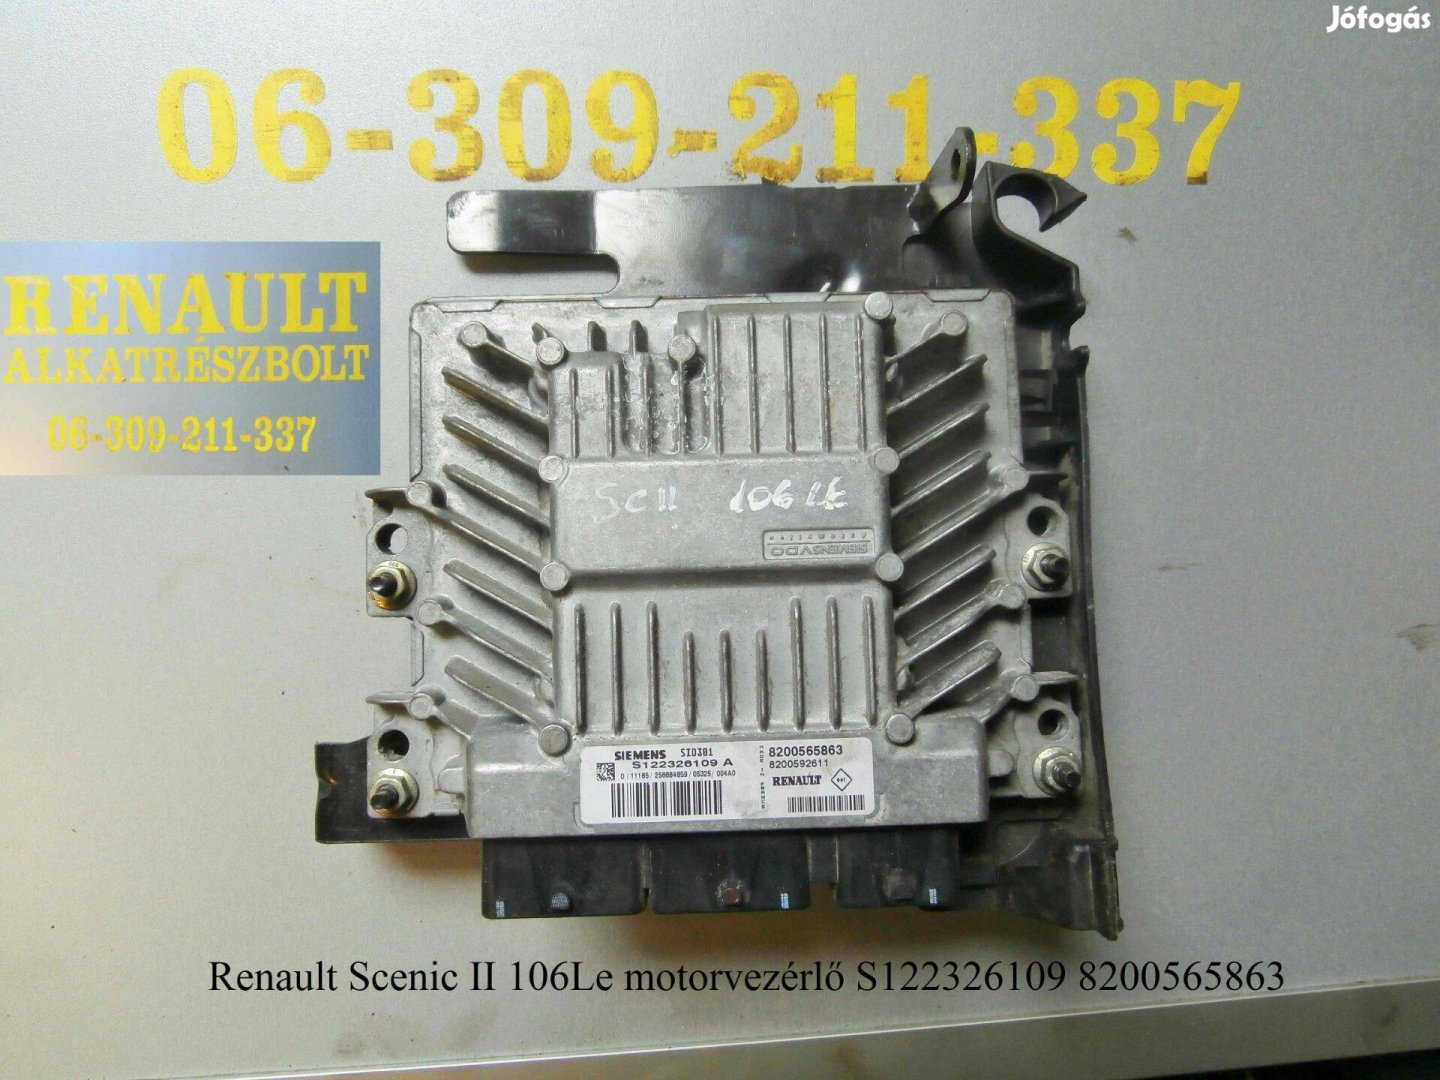 Renault Scenic II 106Le motorvezérlő S122326109 8200565863